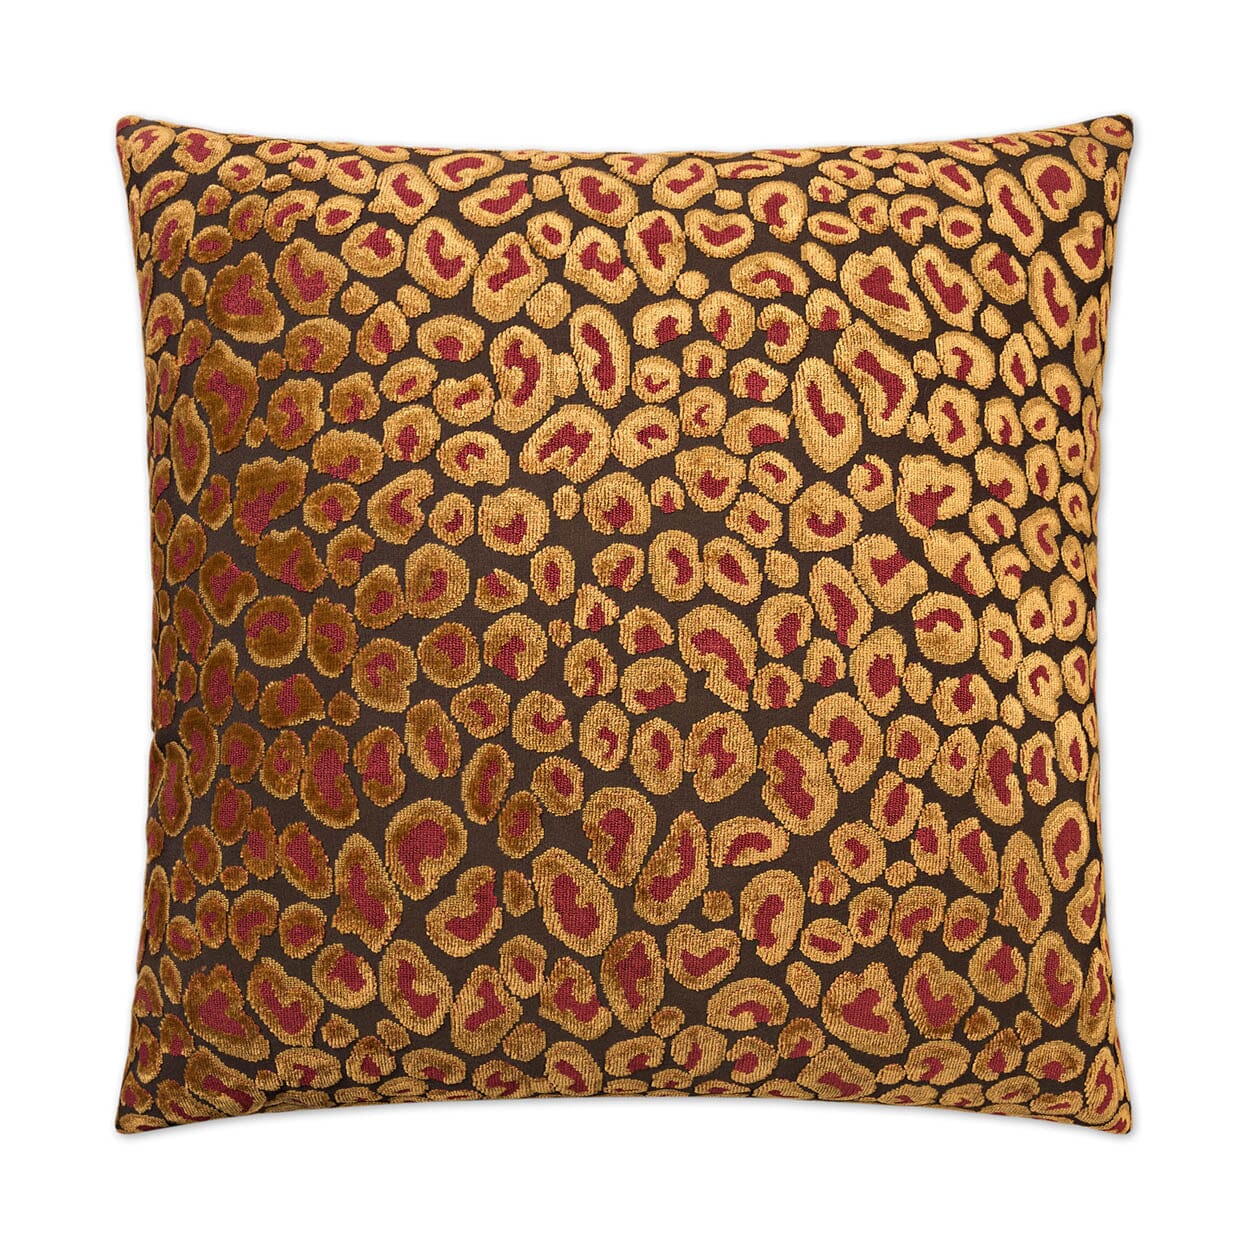 D.V. Kap Cheetah Decorative Throw Pillow | Ruby Pillows D.V Kap Home